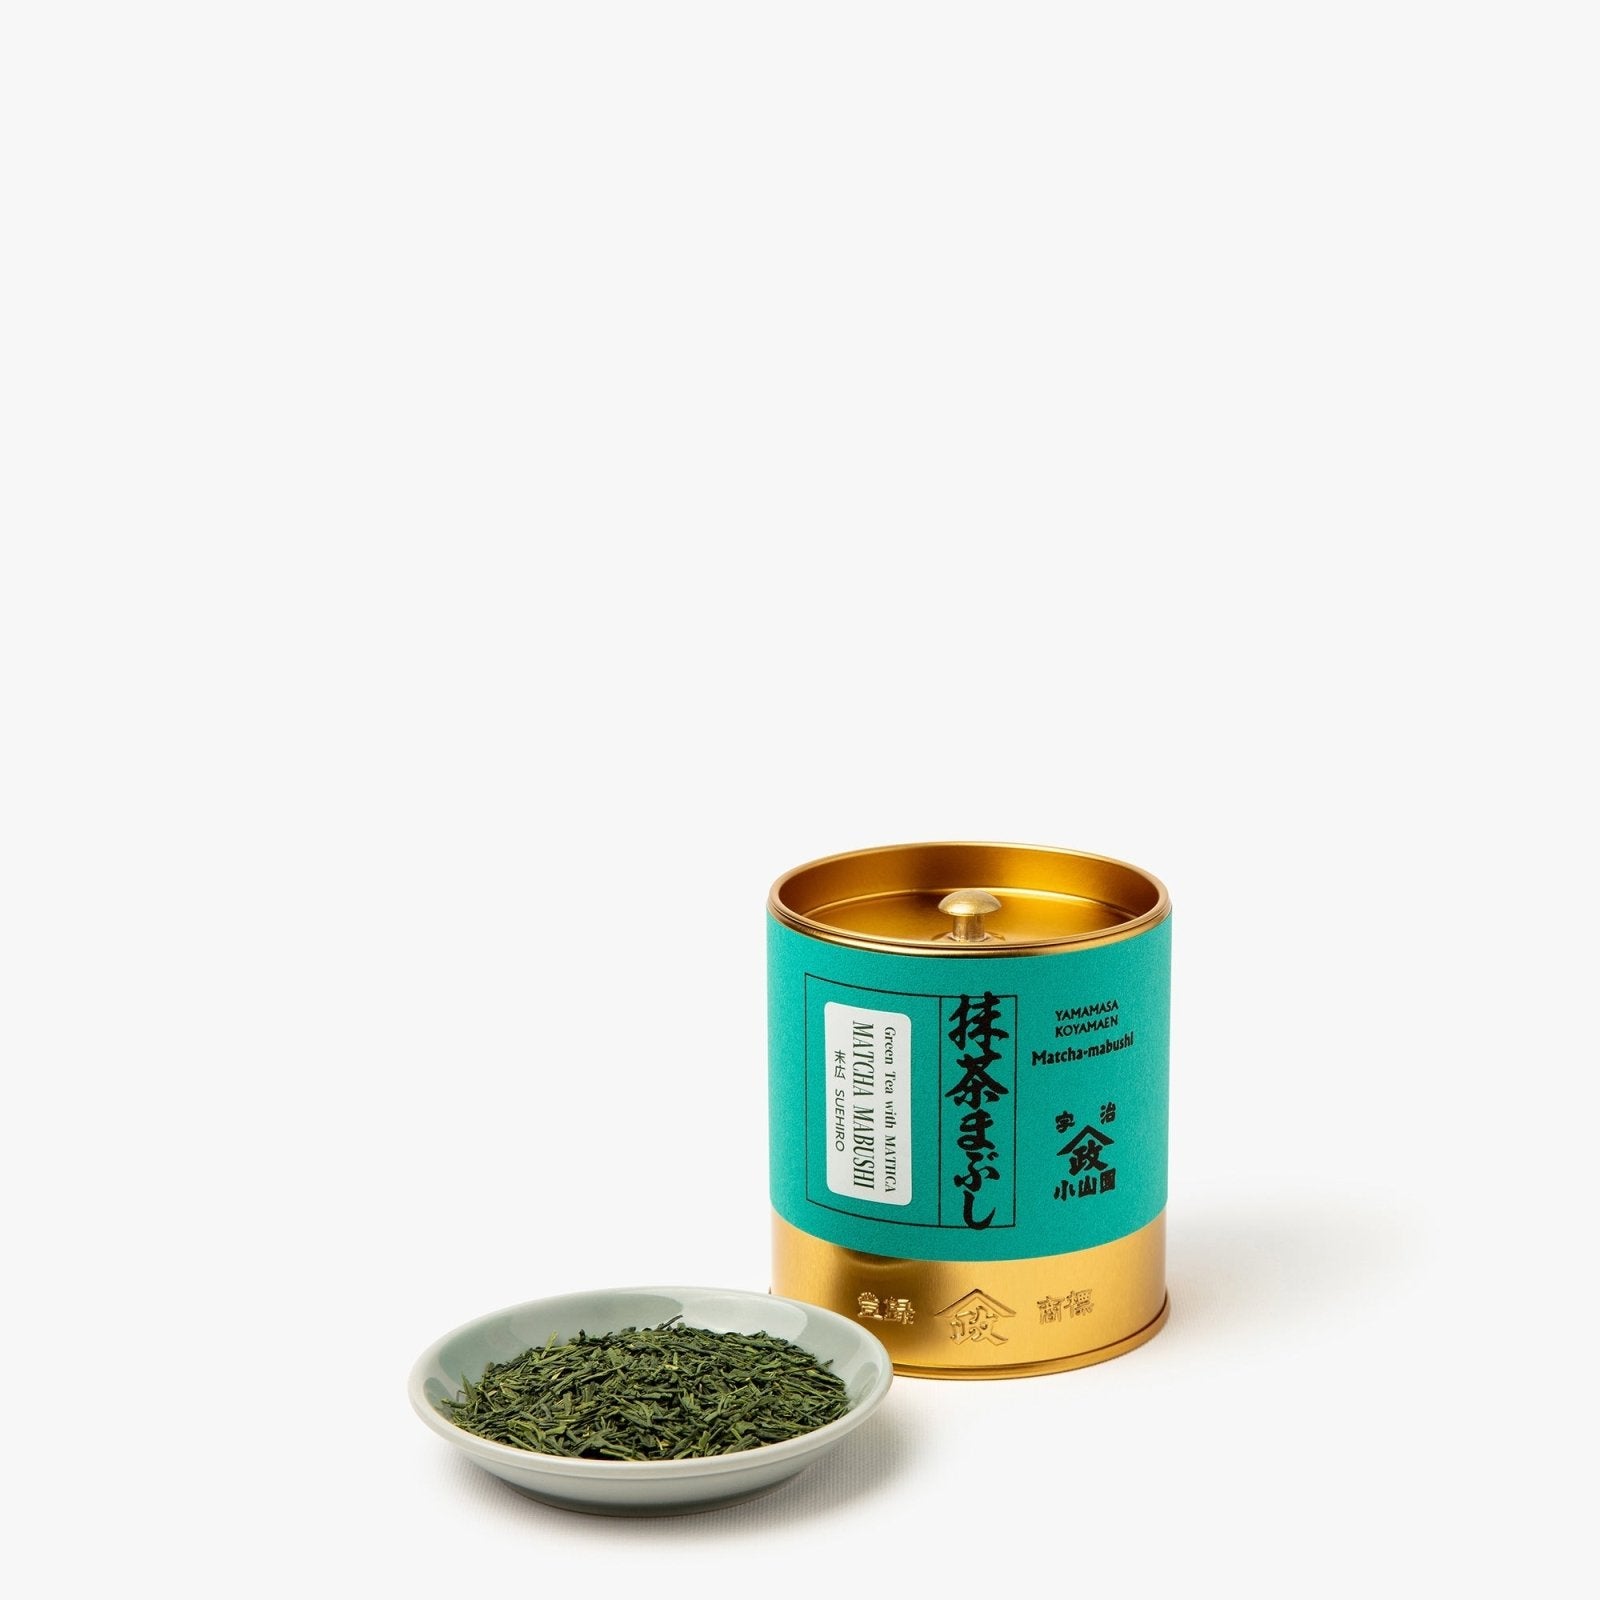 Thé vert sencha au matcha en boîte - en vrac - 100g - Yamamasa Koyamaen - iRASSHAi